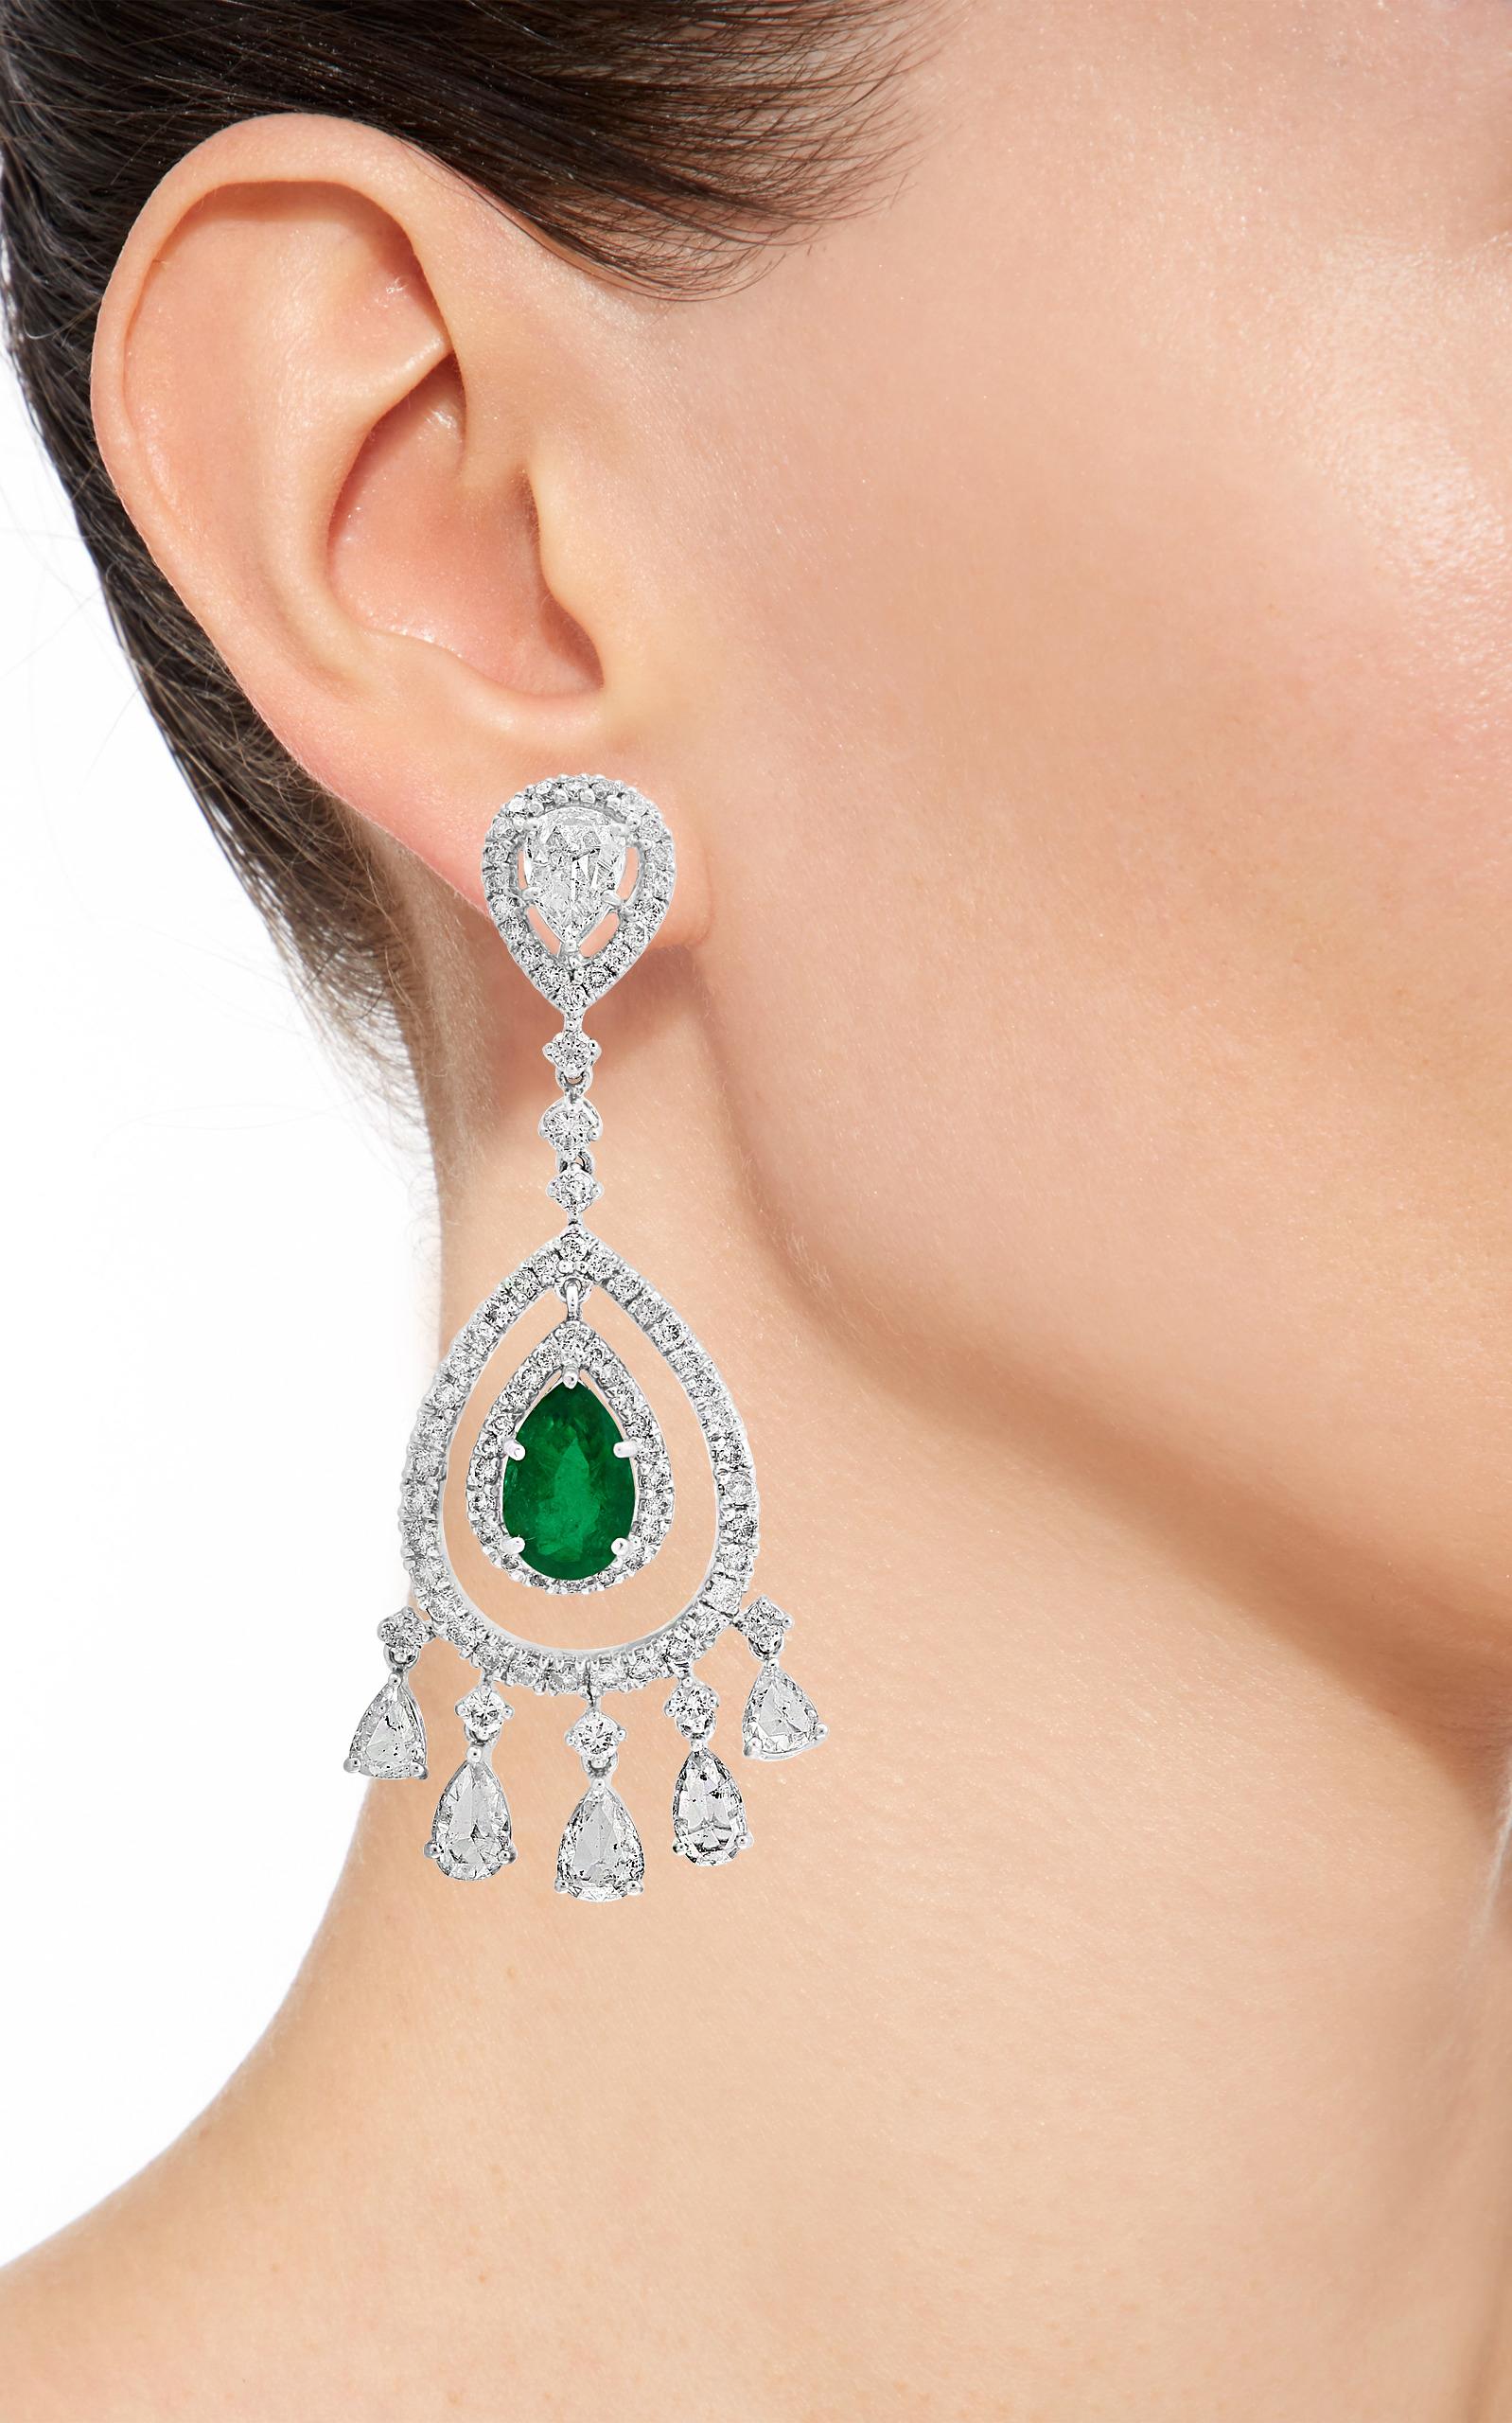 GIA Certified 6.5Ct Zambian Pear Emerald Diamond Hanging/Drop Earrings 18KW Gold For Sale 3